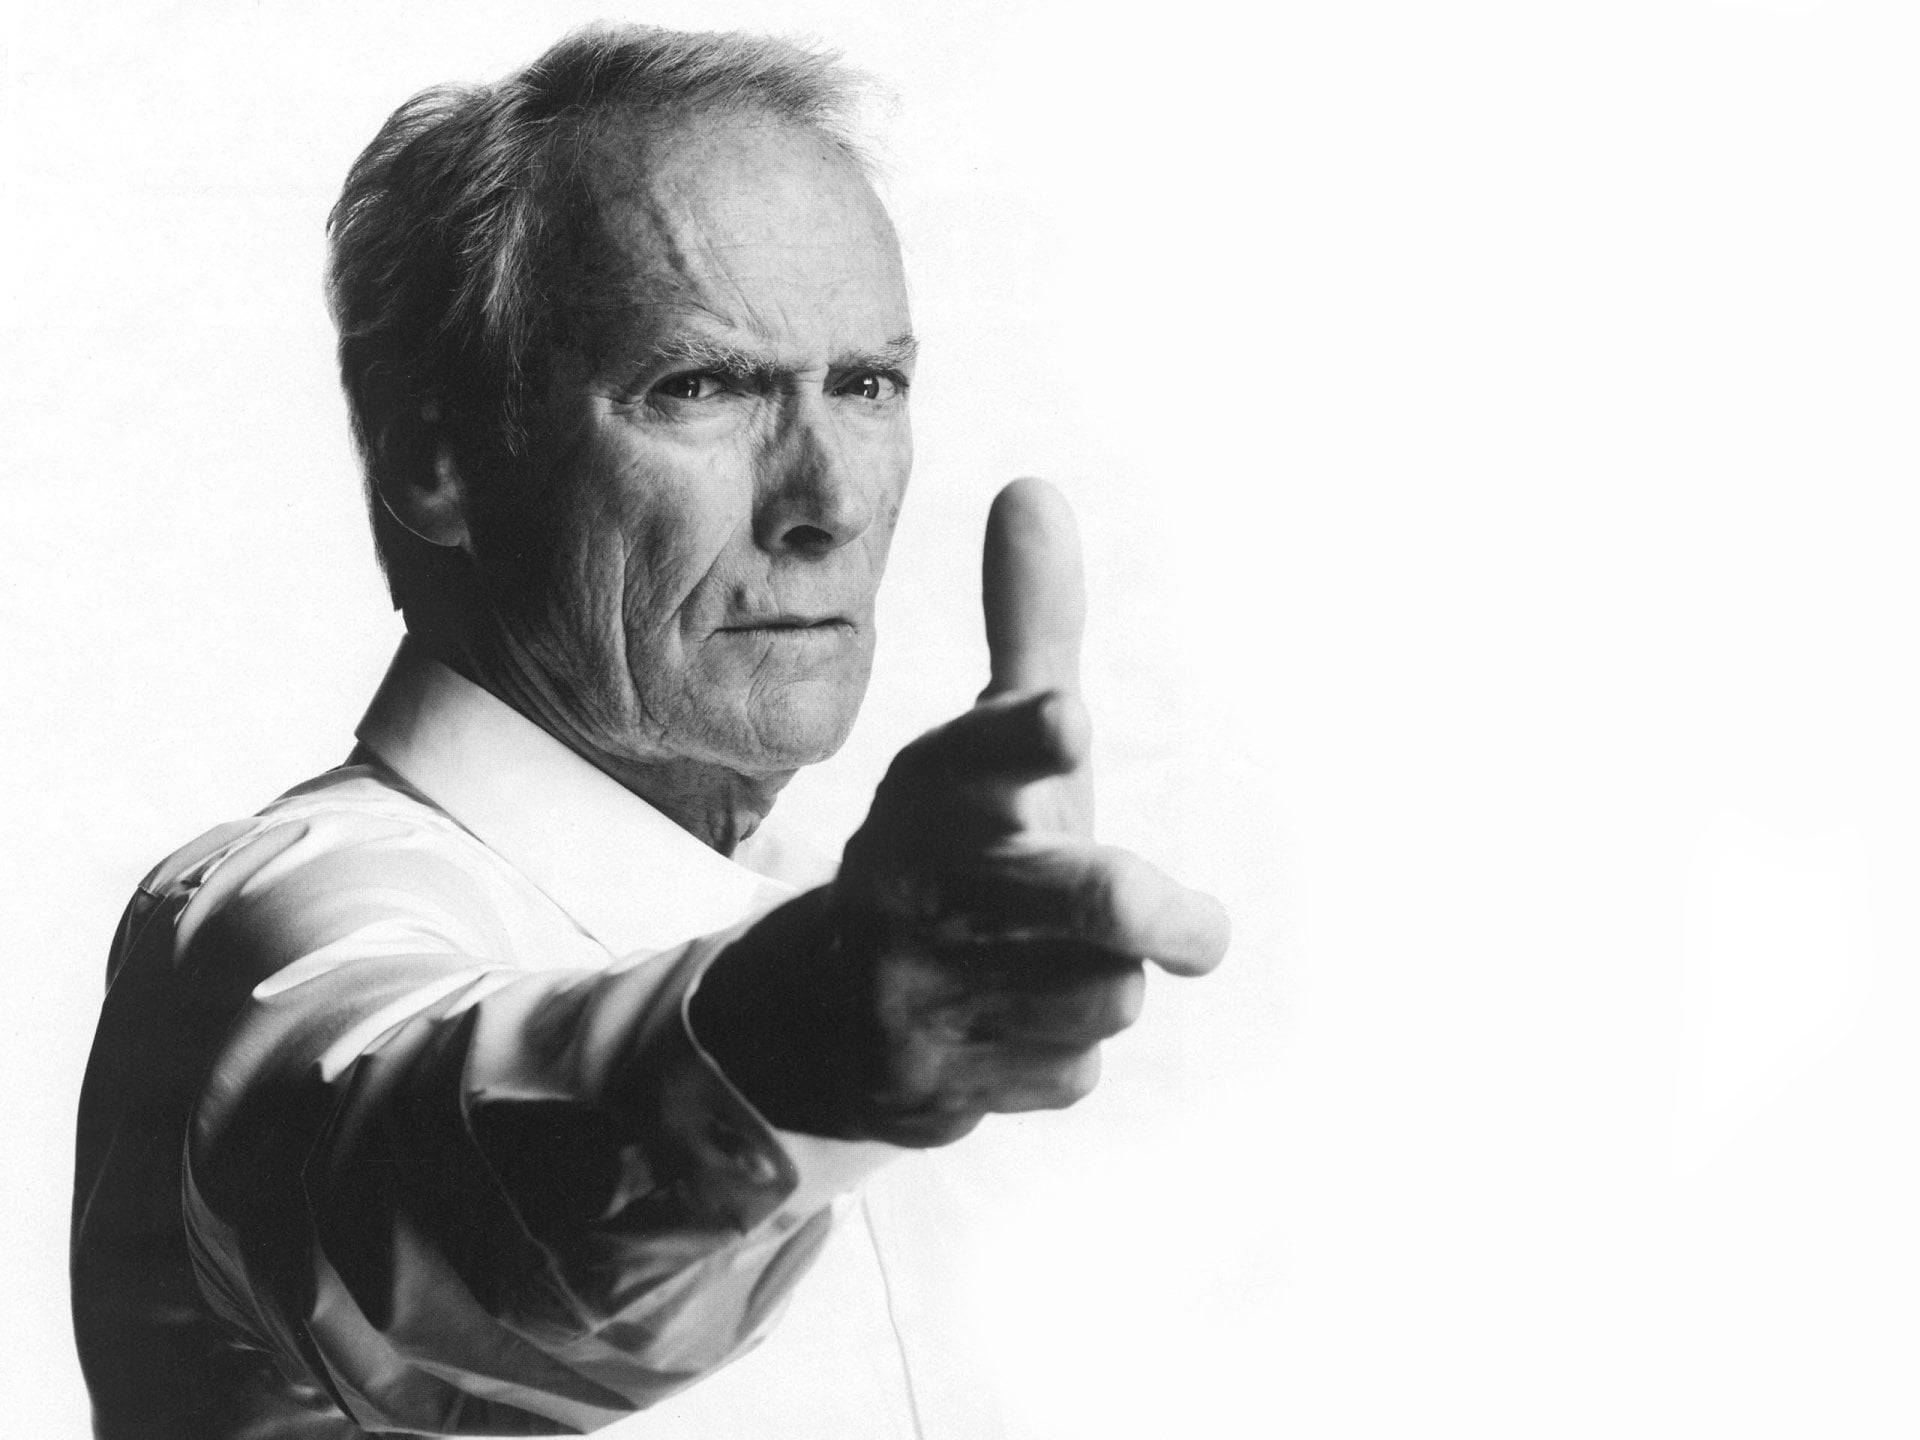 Clint Eastwood Famous Finger-guns Pose Background